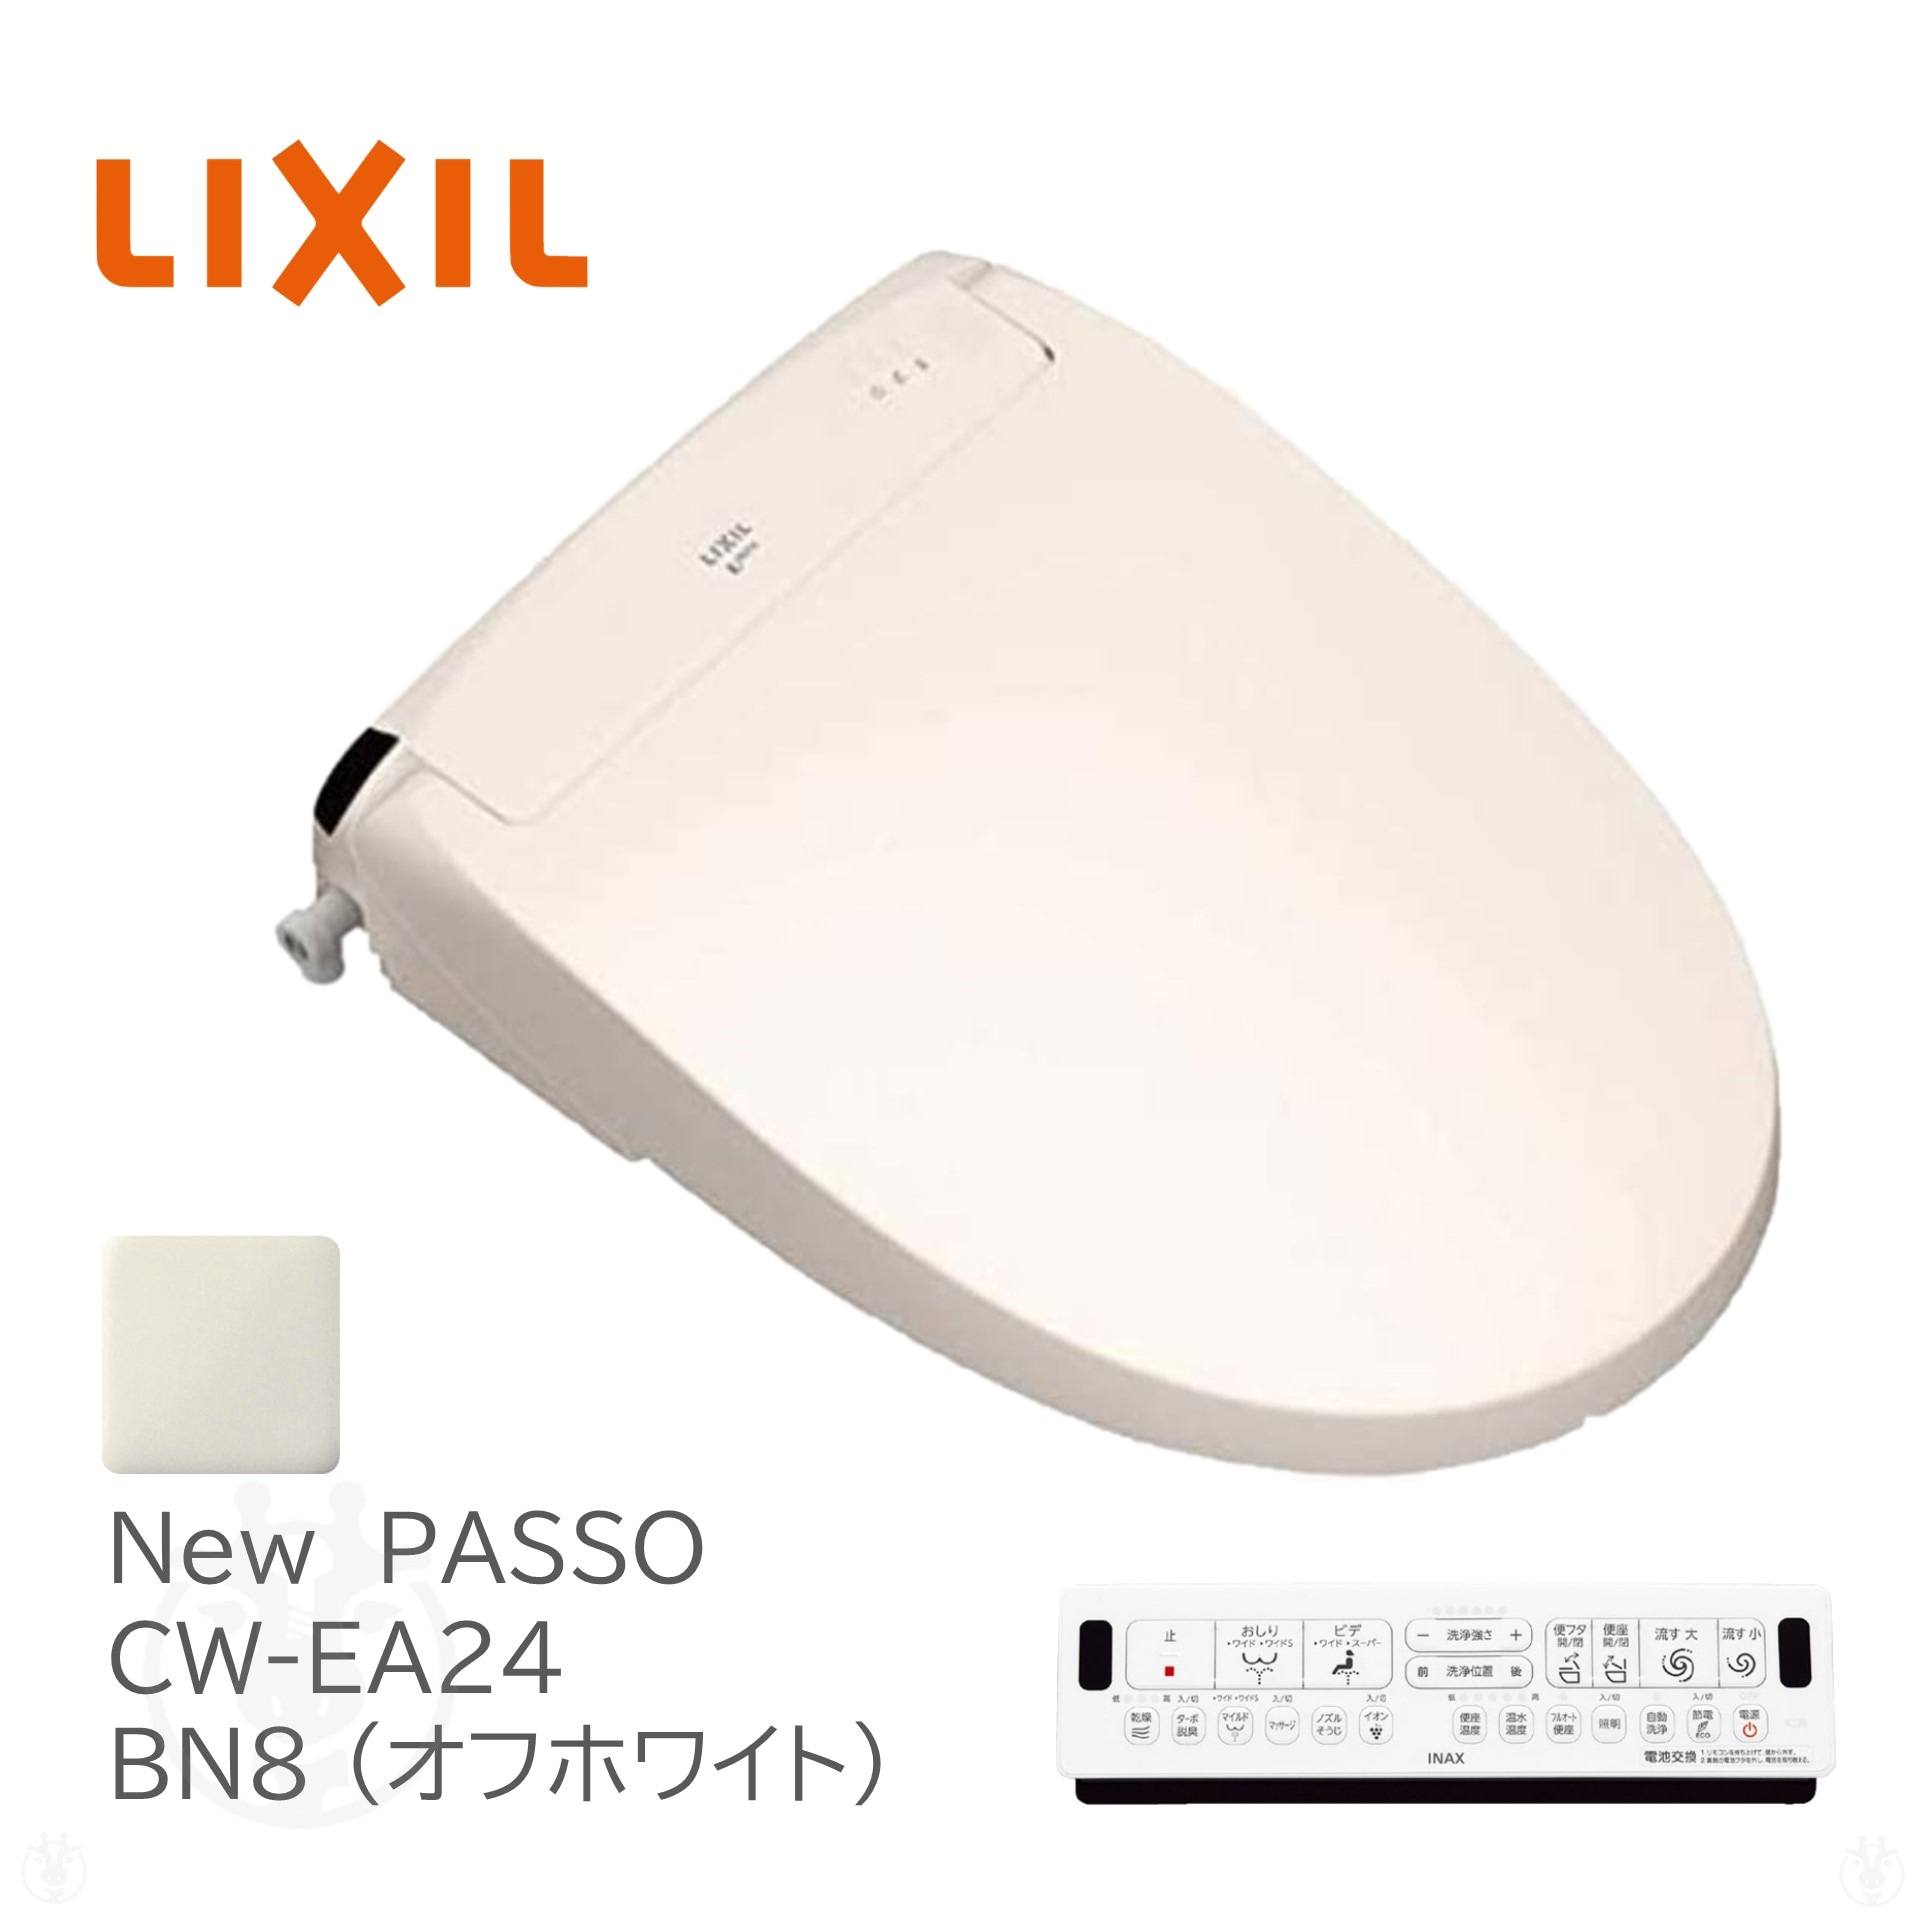 INAX New PASSO CW-EA24 BN8 [オフホワイト] 価格比較 - 価格.com